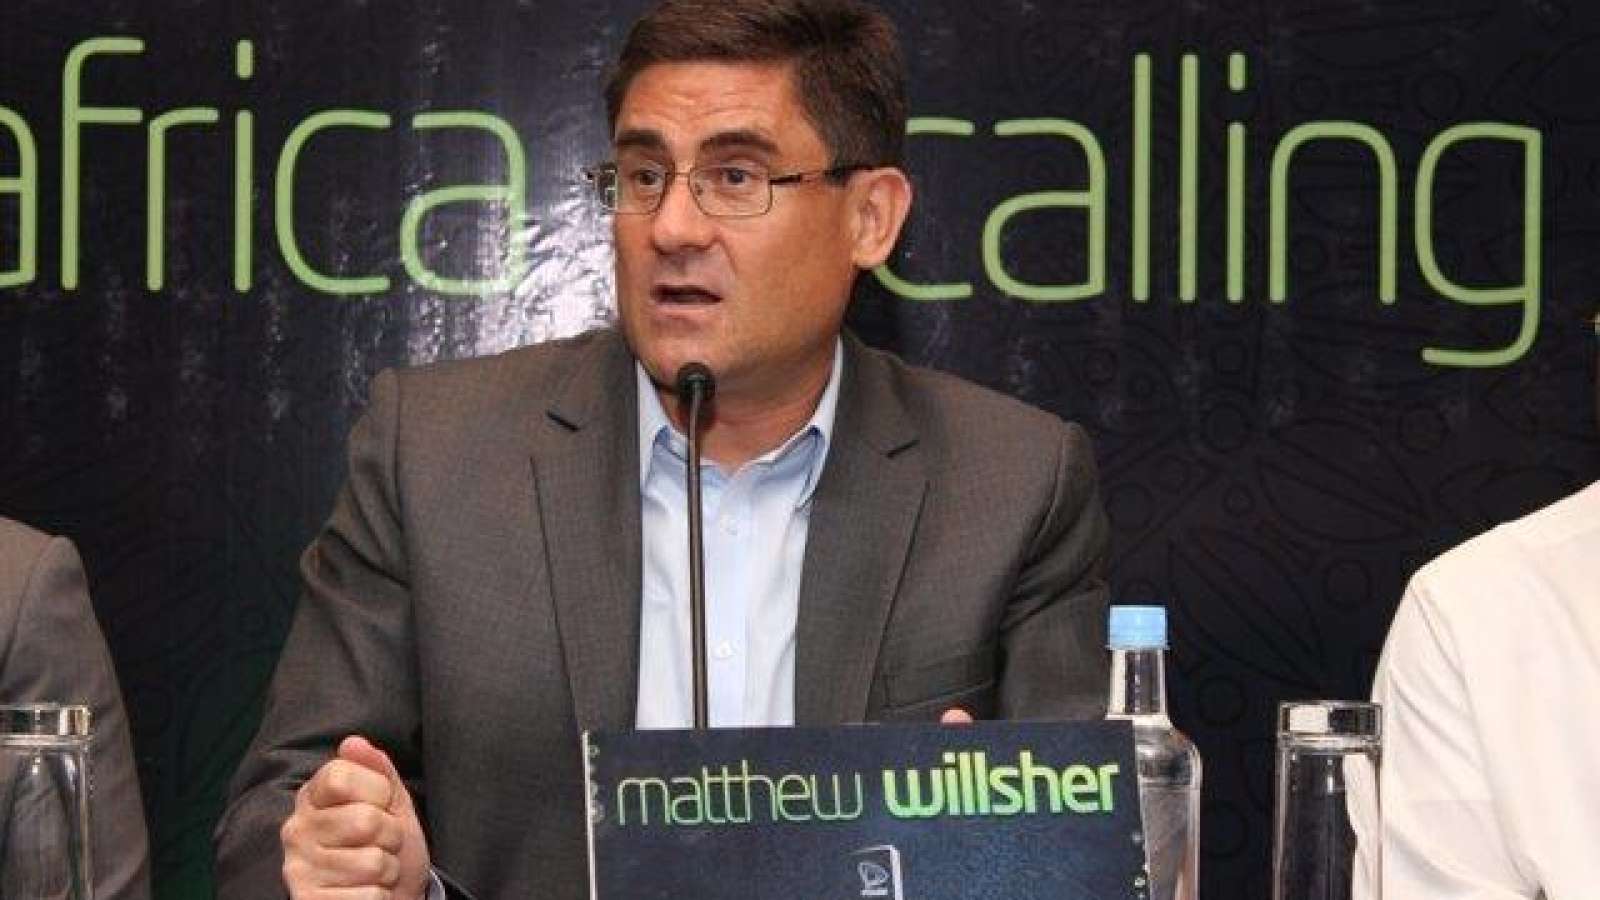 Matthew Willsher, erstwhile CEO of Etisalat